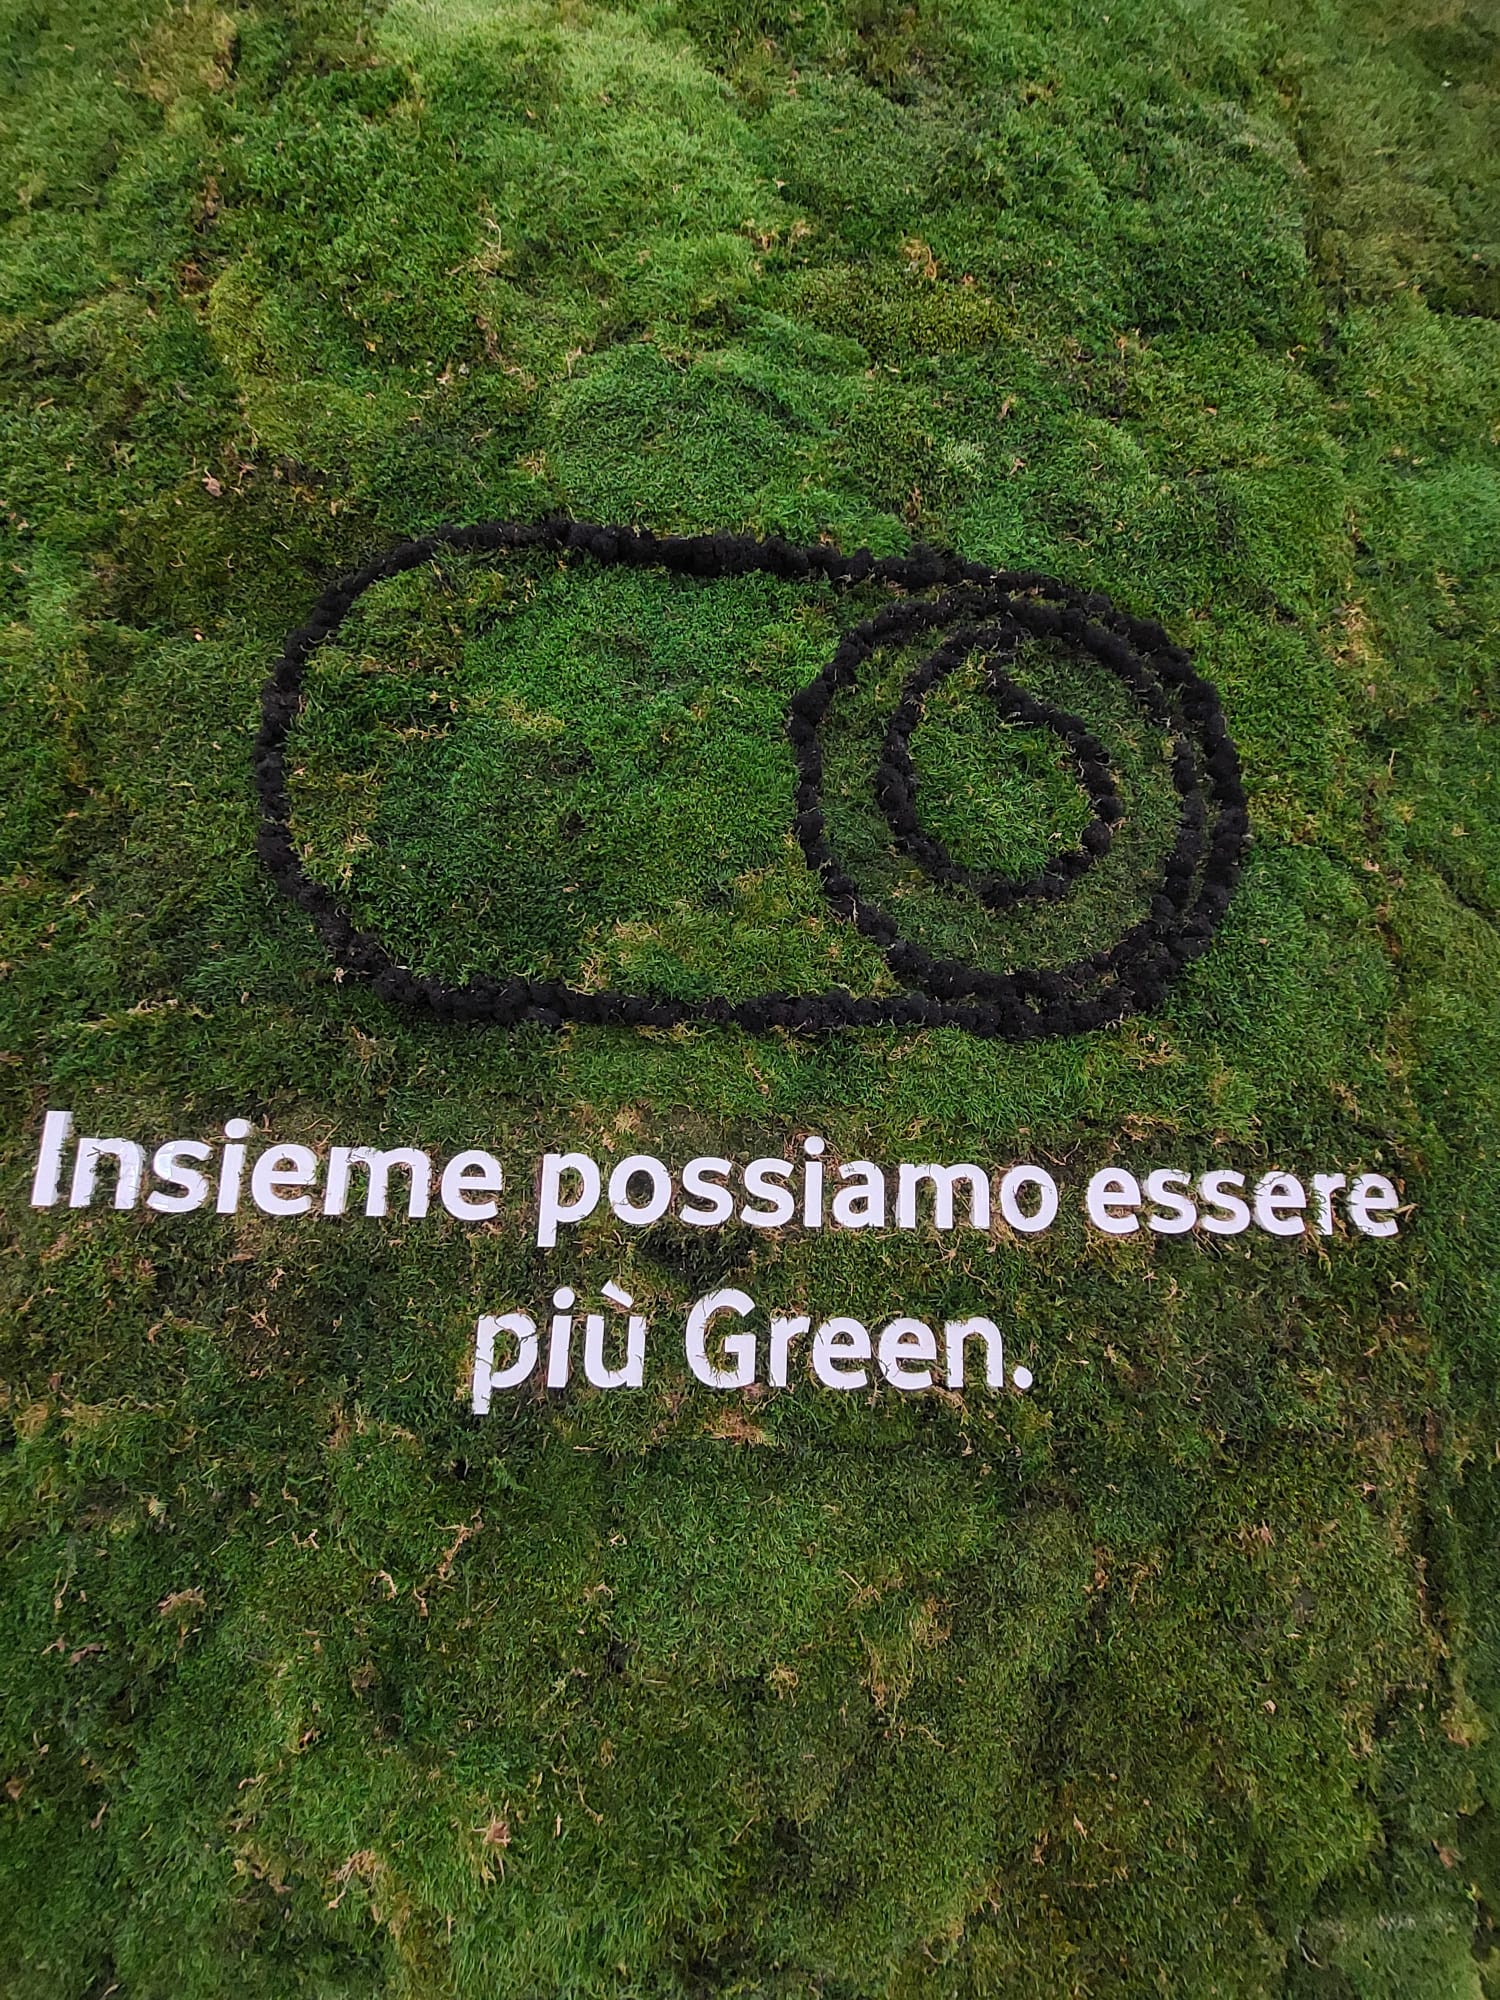 Vetrine Green Vodafone